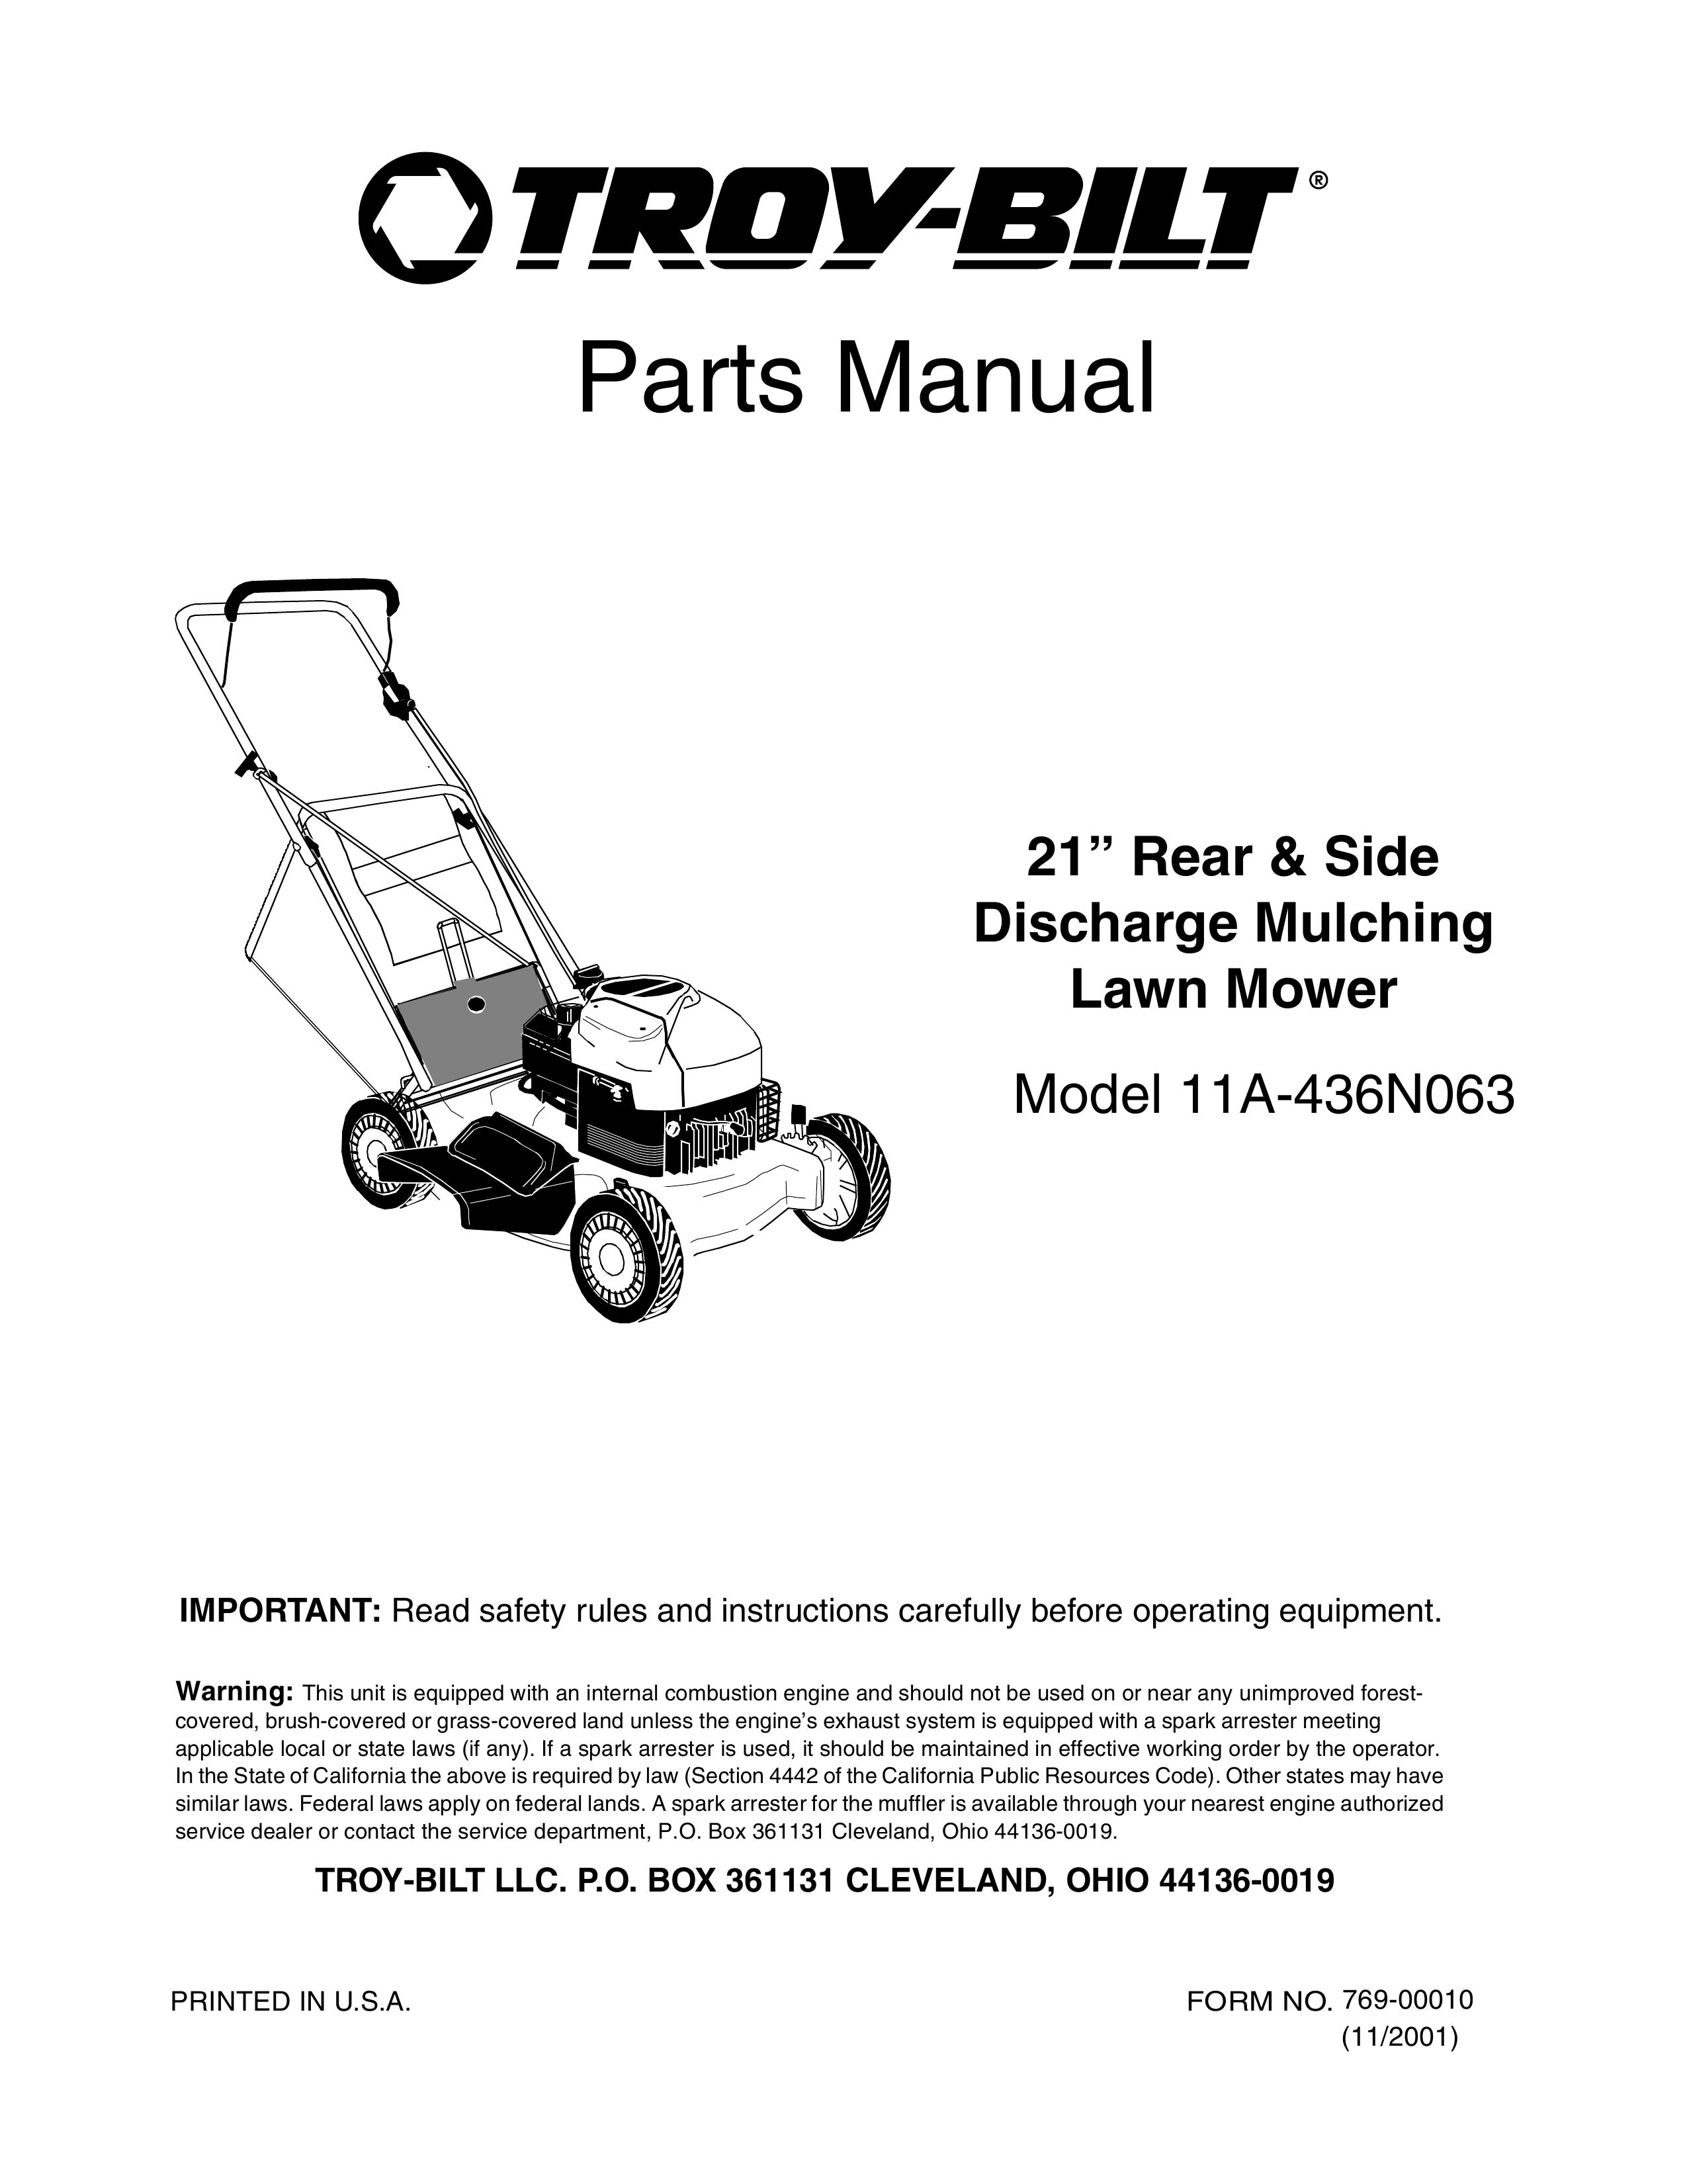 Troy-Bilt 11A-436N063 Lawn Mower User Manual